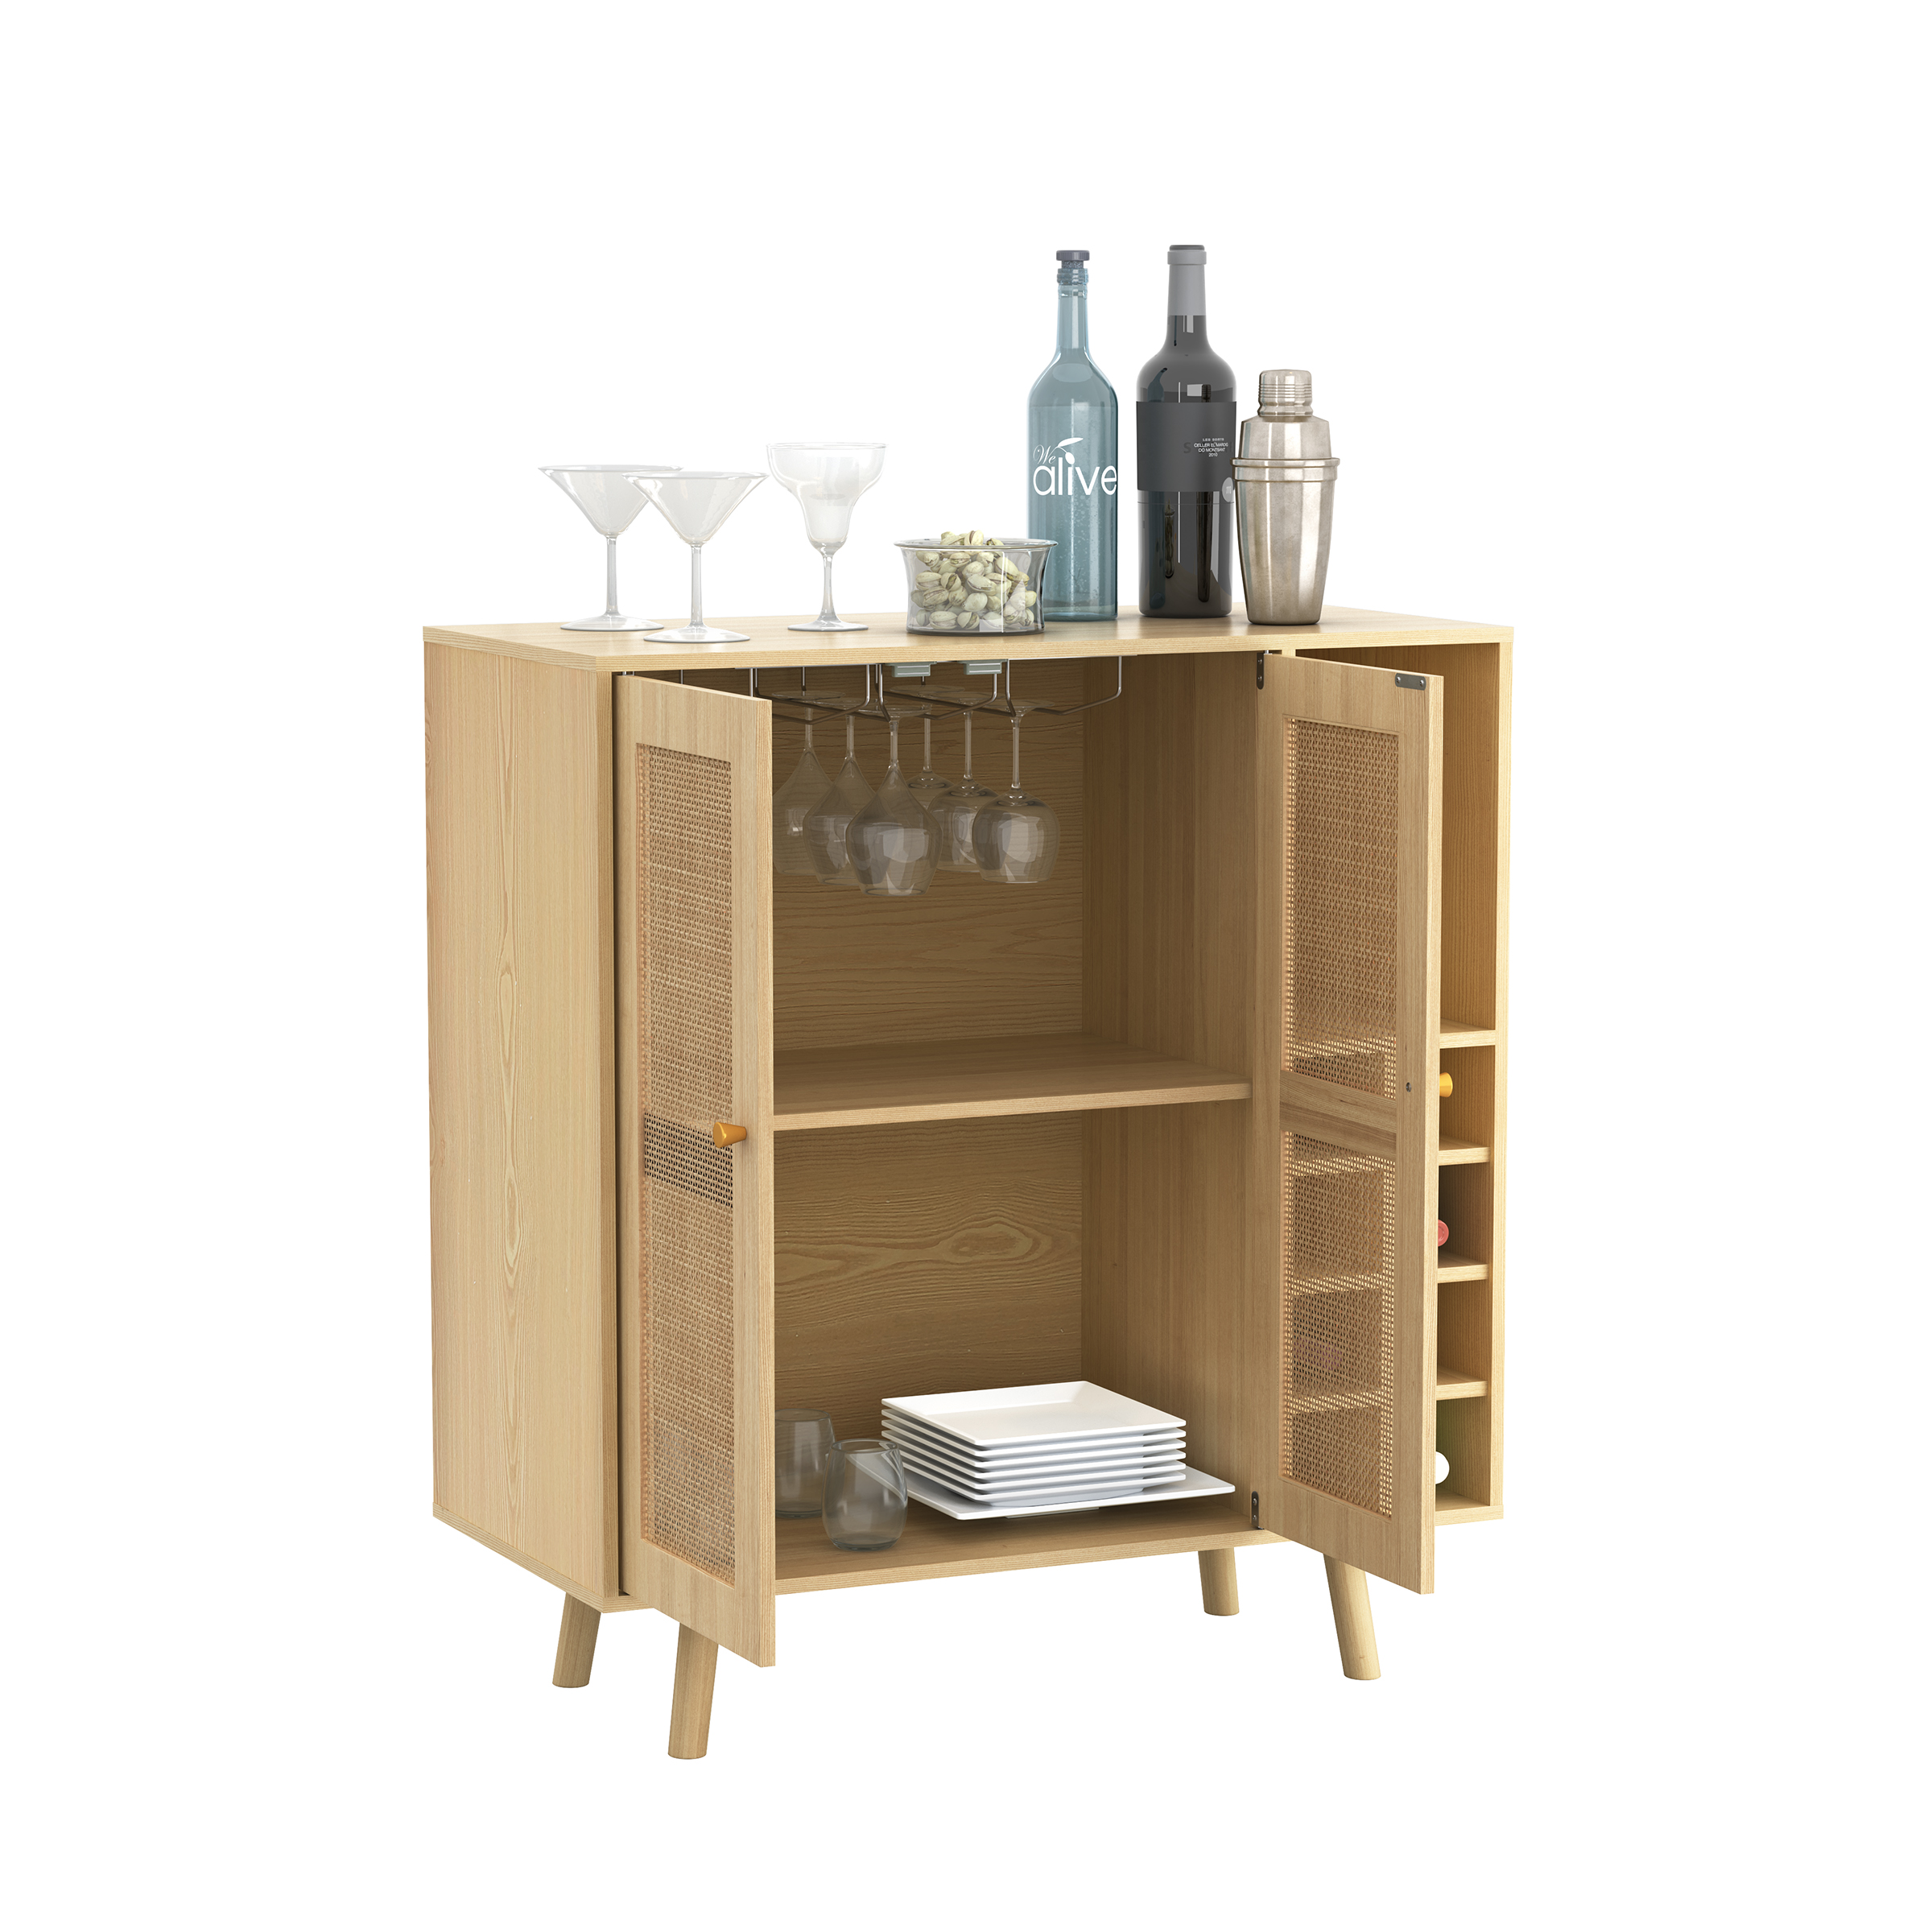 Atlantic Loft & Luv Coda Rattan Bar Cabinet with Wine Holder, Natural - image 6 of 10